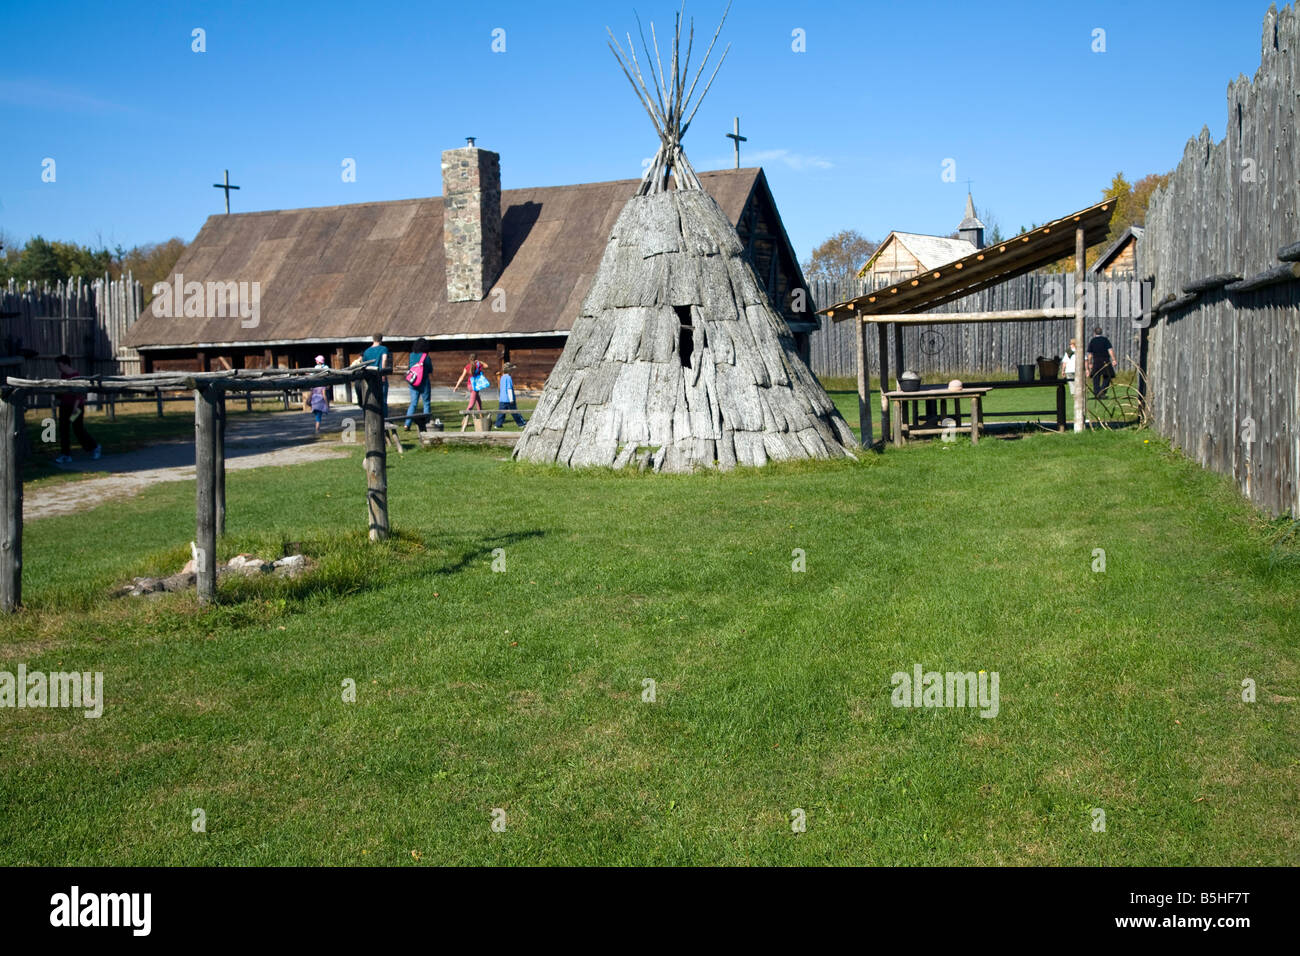 Aboriginal Village of the Huron-Jesuits Indians near Midland,Ontario,Canada Stock Photo